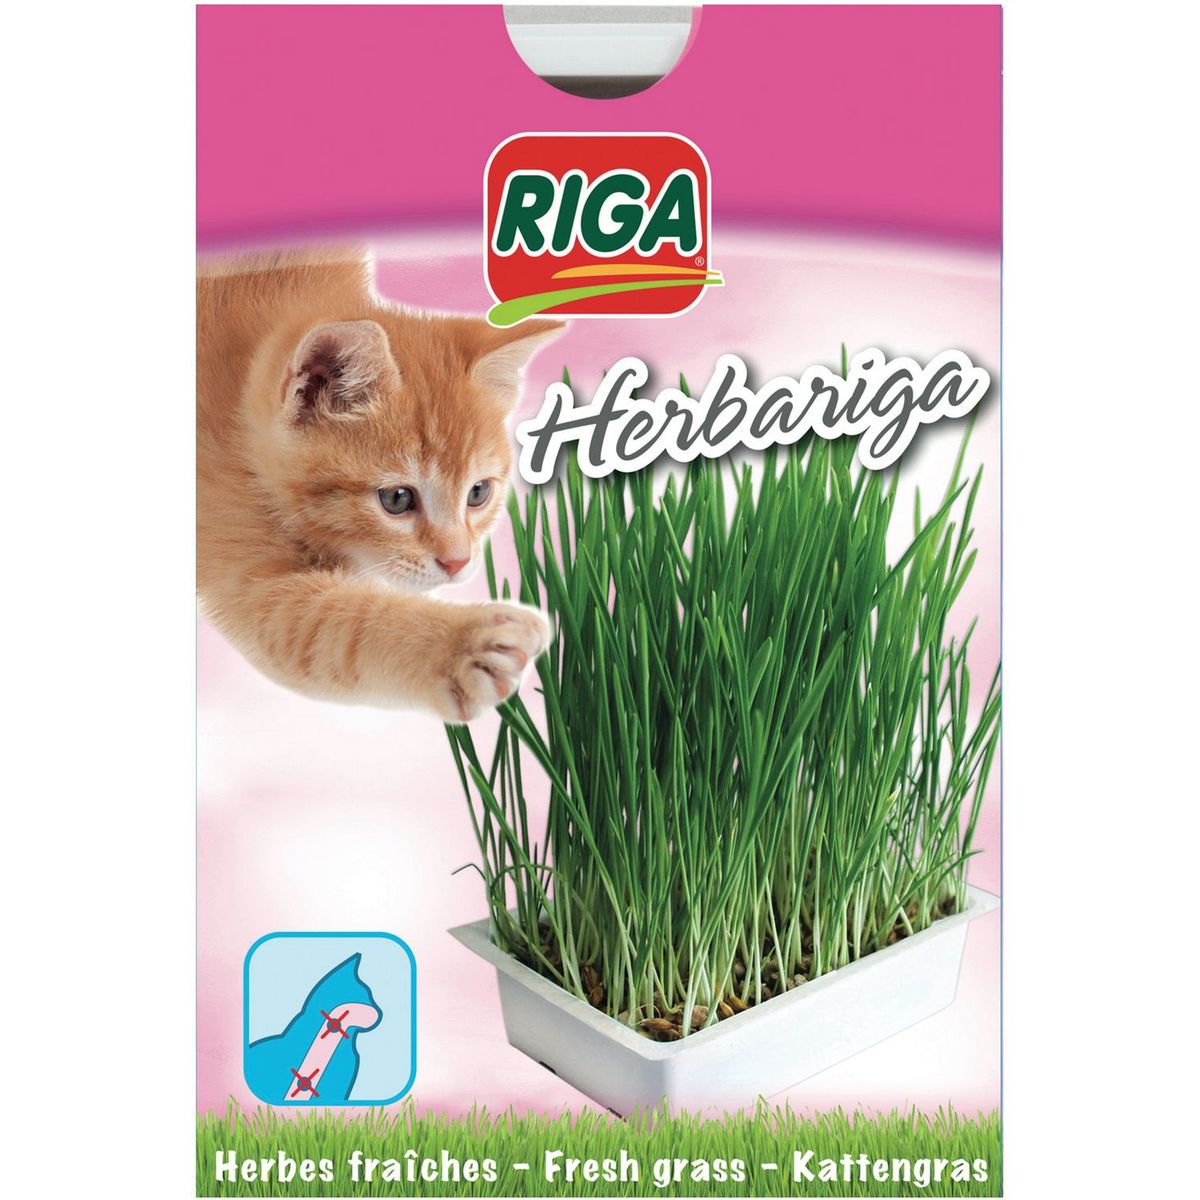 RIGA Herbariga herbes fraîches pour chat 1 pièce pas cher 